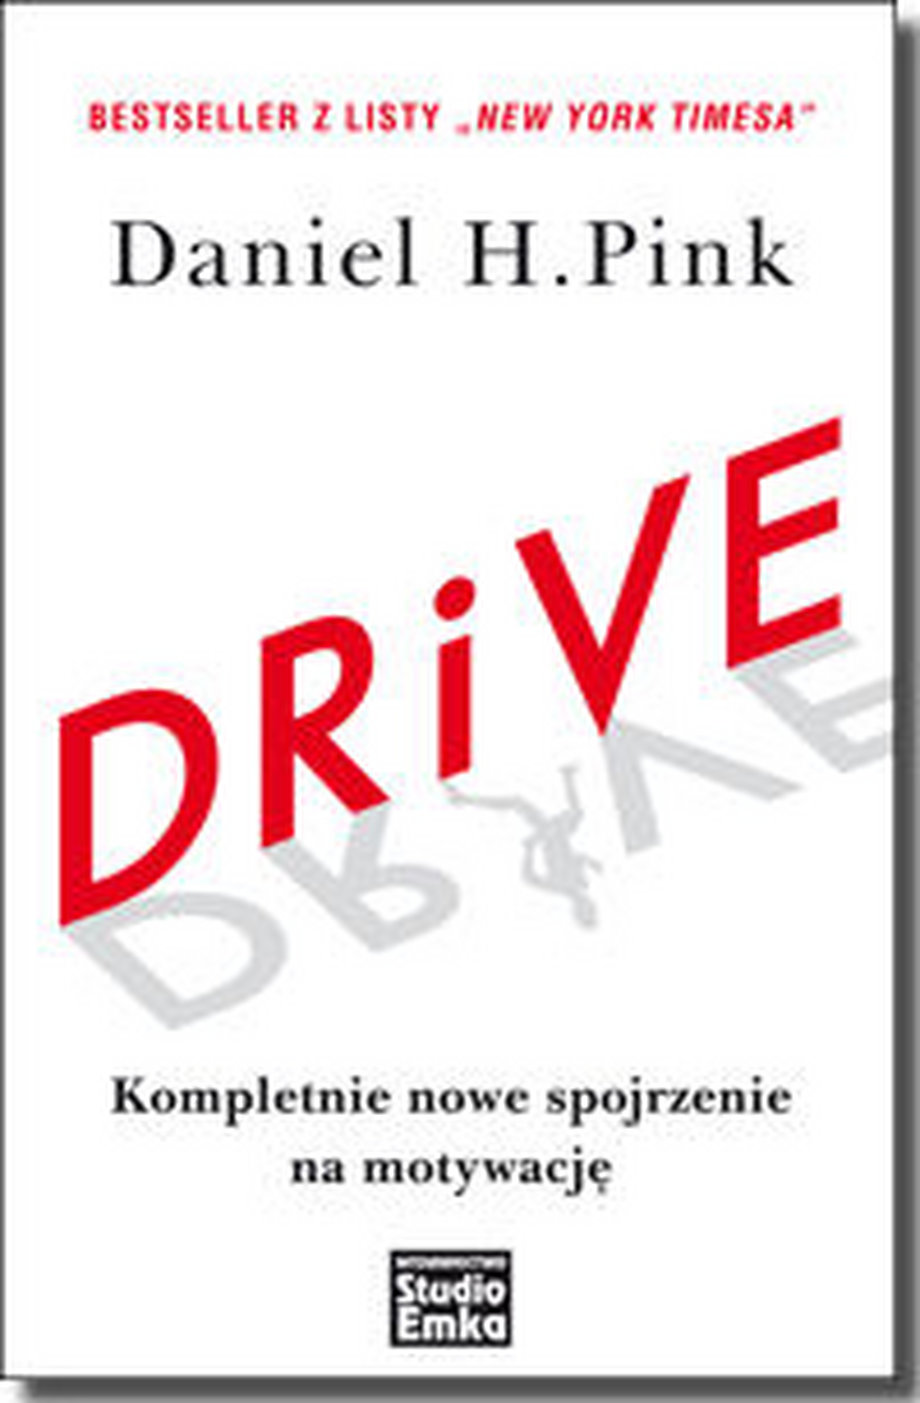 "Drive" Daniel H. Pink